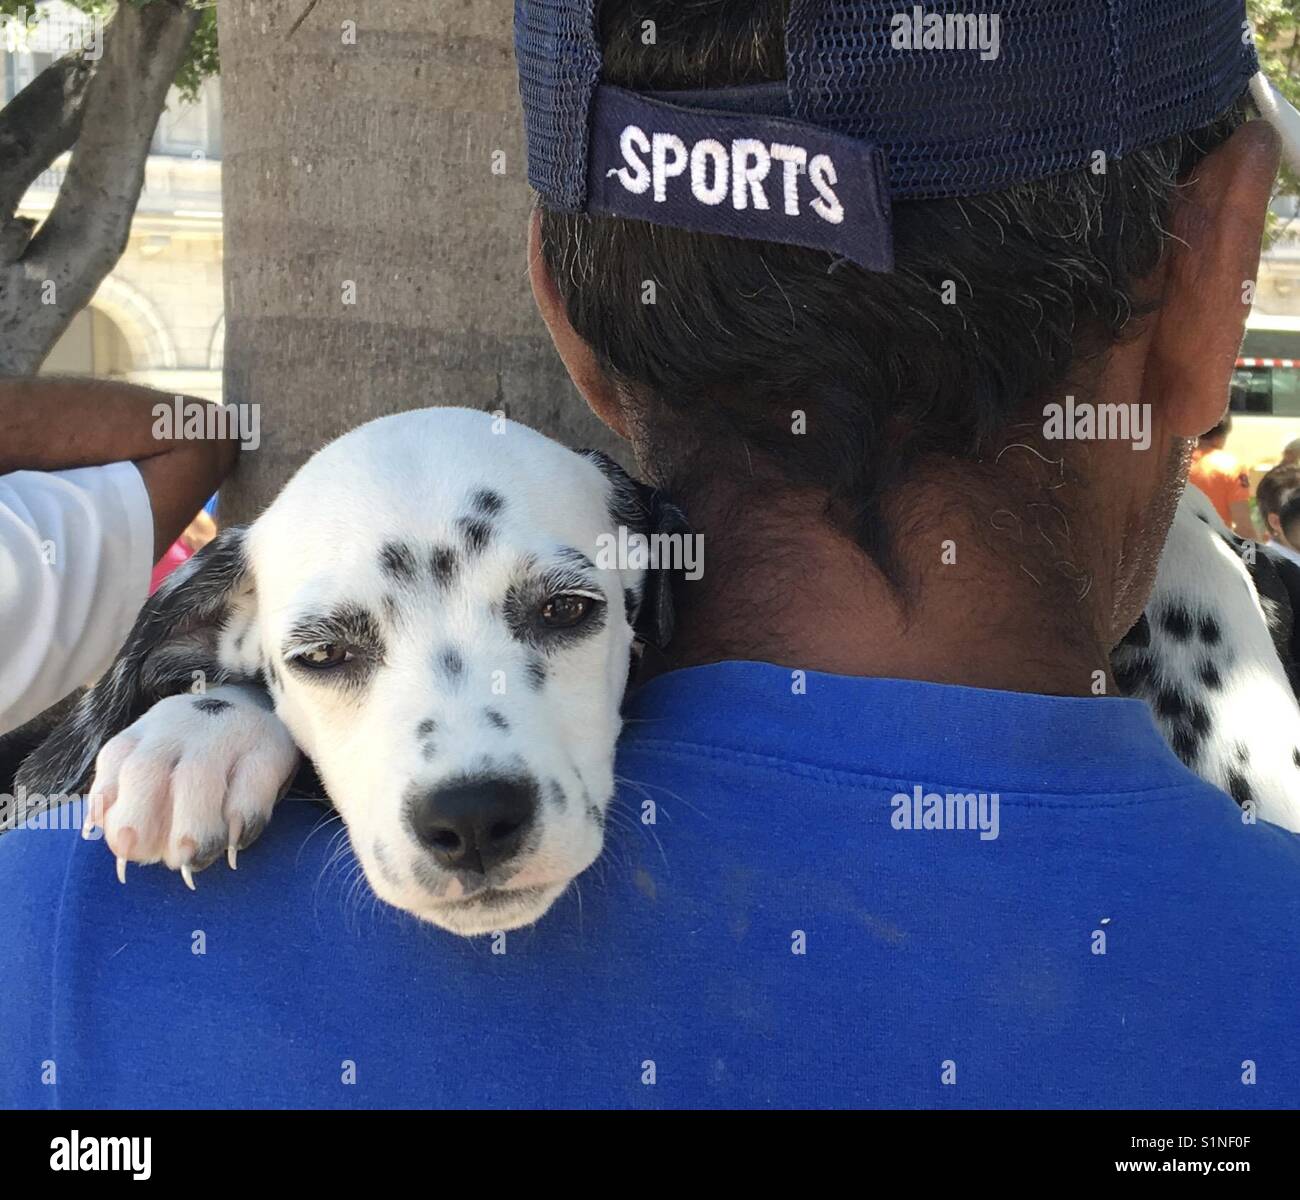 Man holding Dalmatian puppy dog Stock Photo